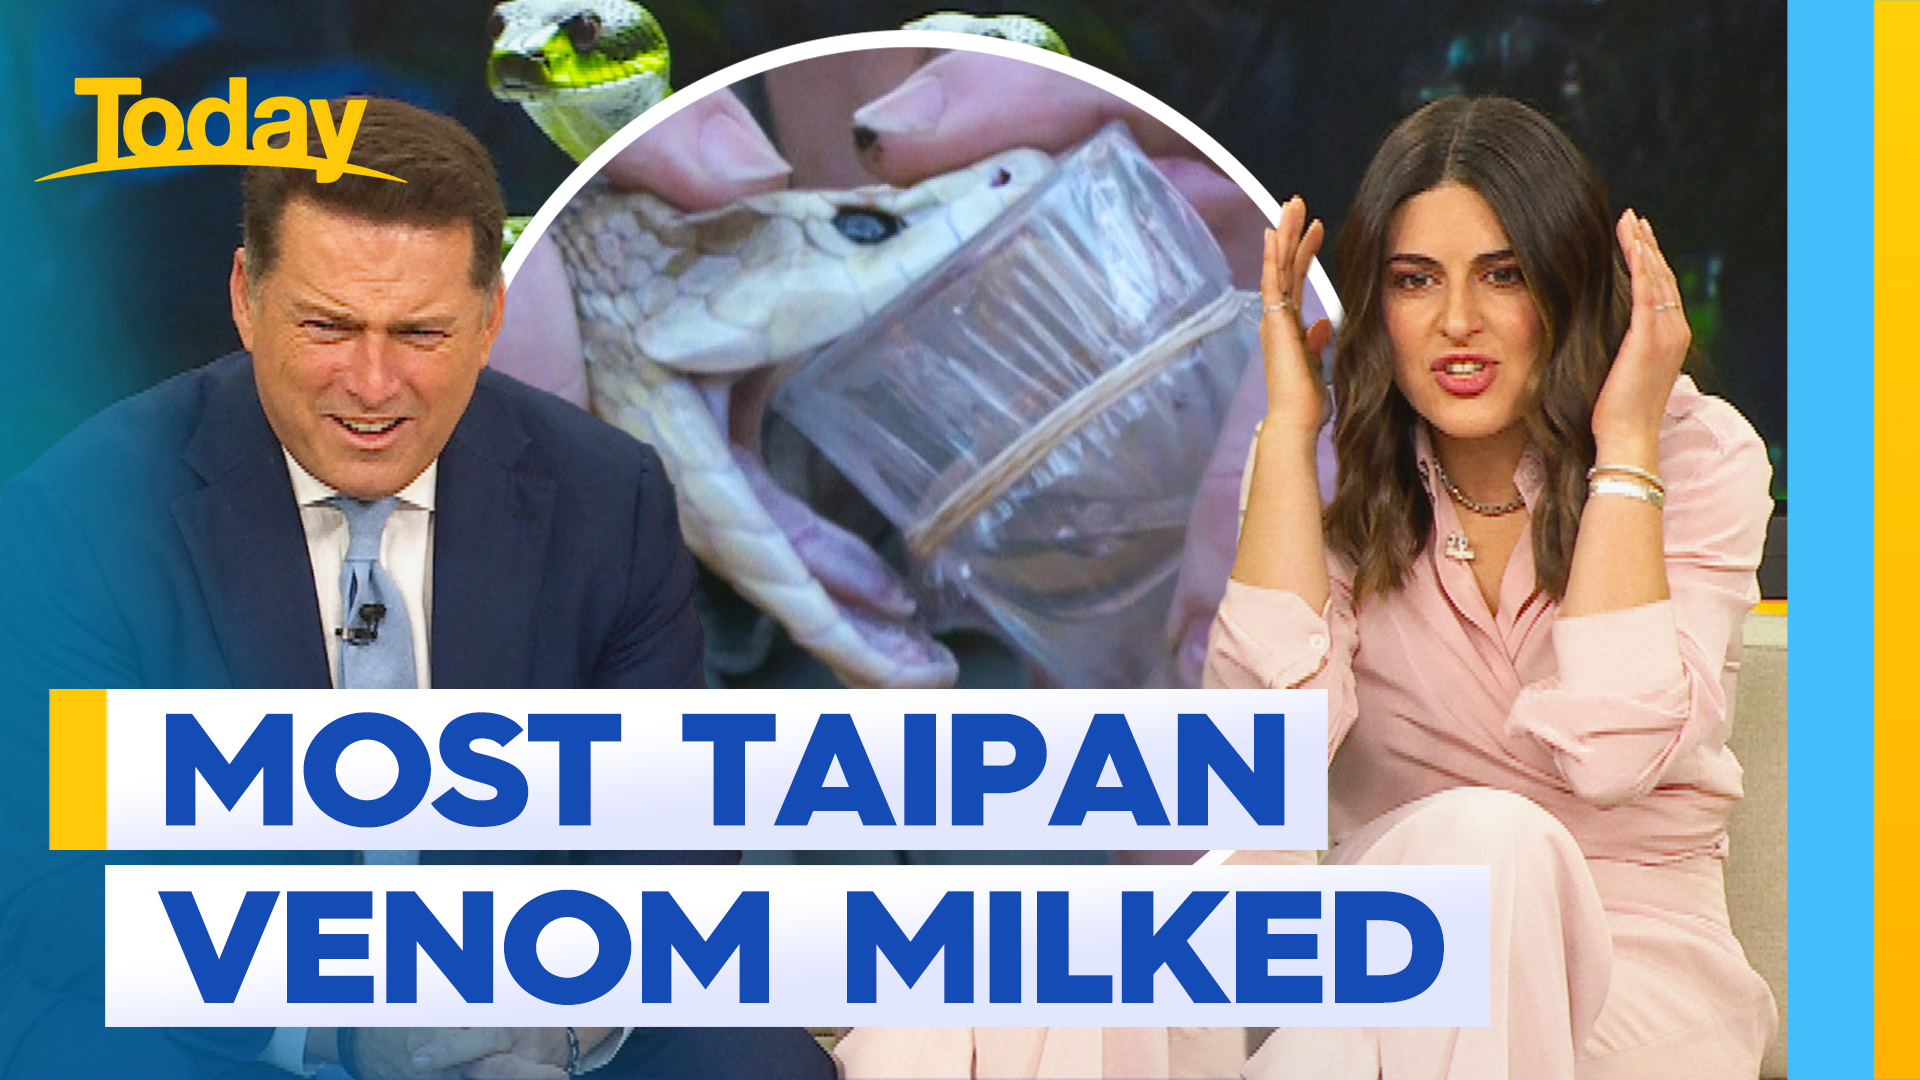 Australian Reptile Park breaks record for most Taipan venom milked